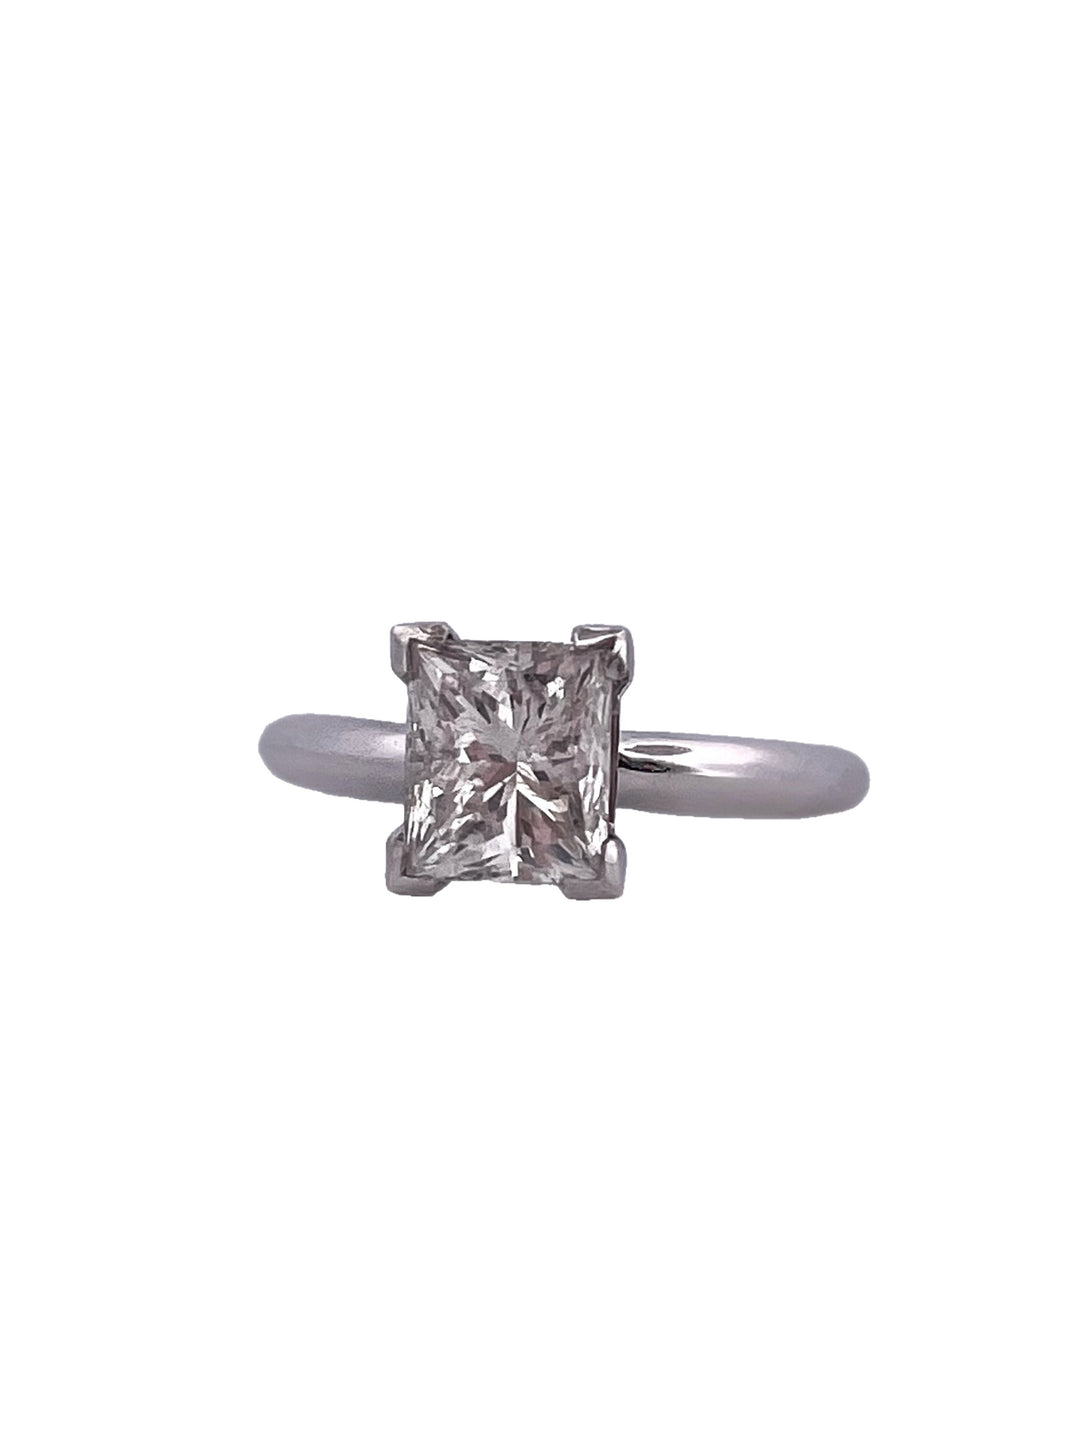 1.78 Carat Rare Elongated Princess Cut Solitaire Engagement Ring